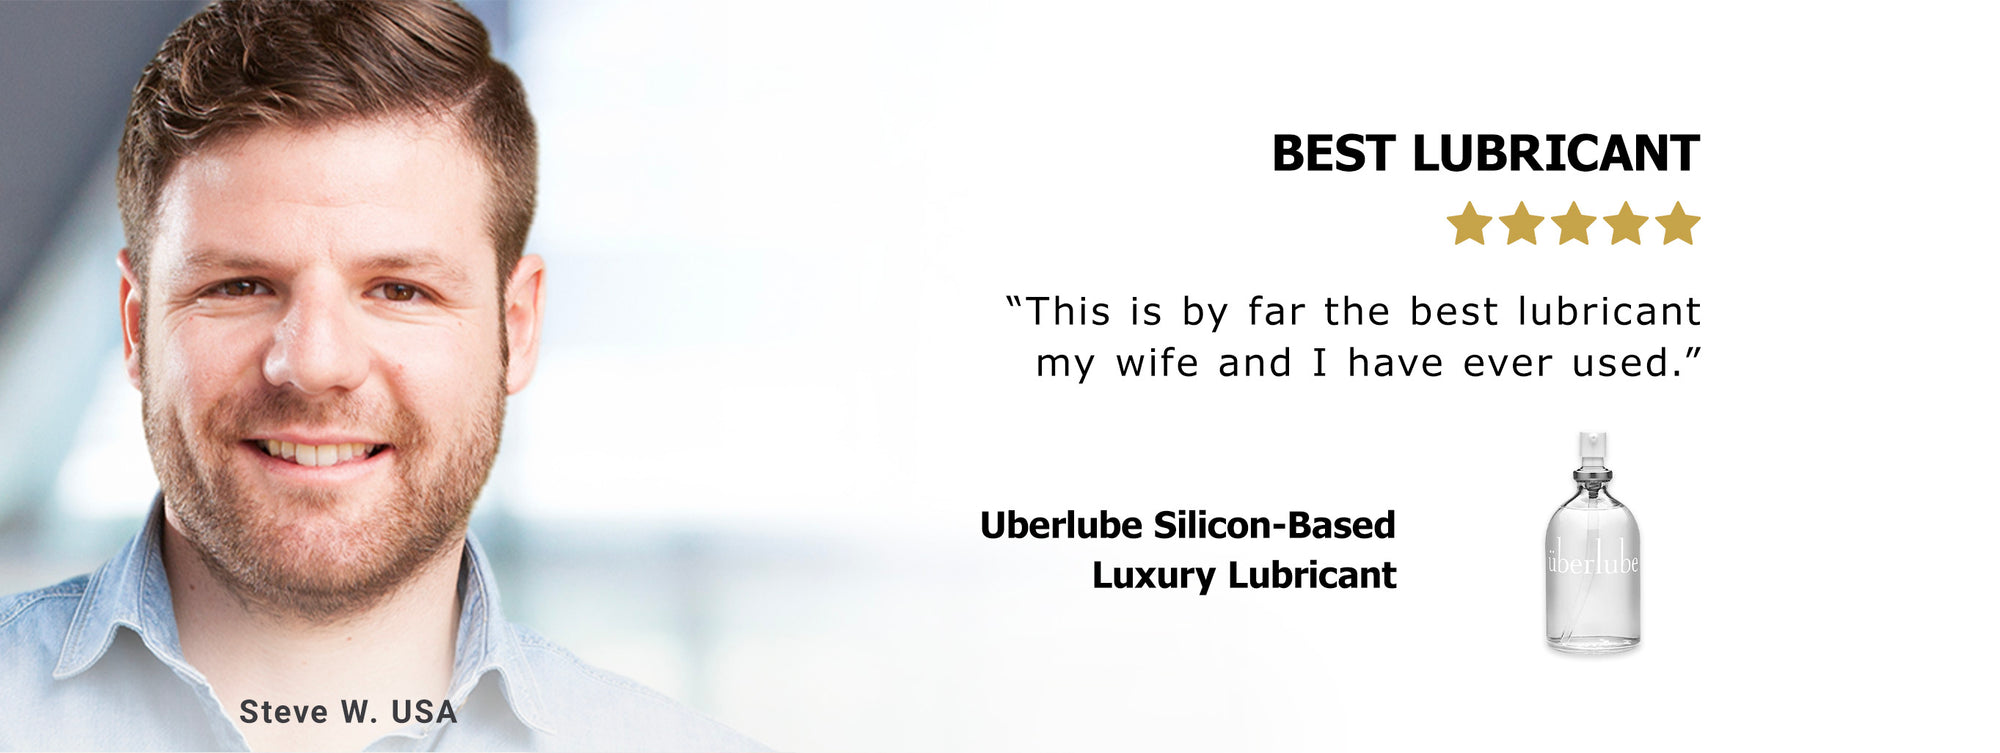 Testimonial Rating for Uberlube Silicon-Based Luxury Lubricant Desktop